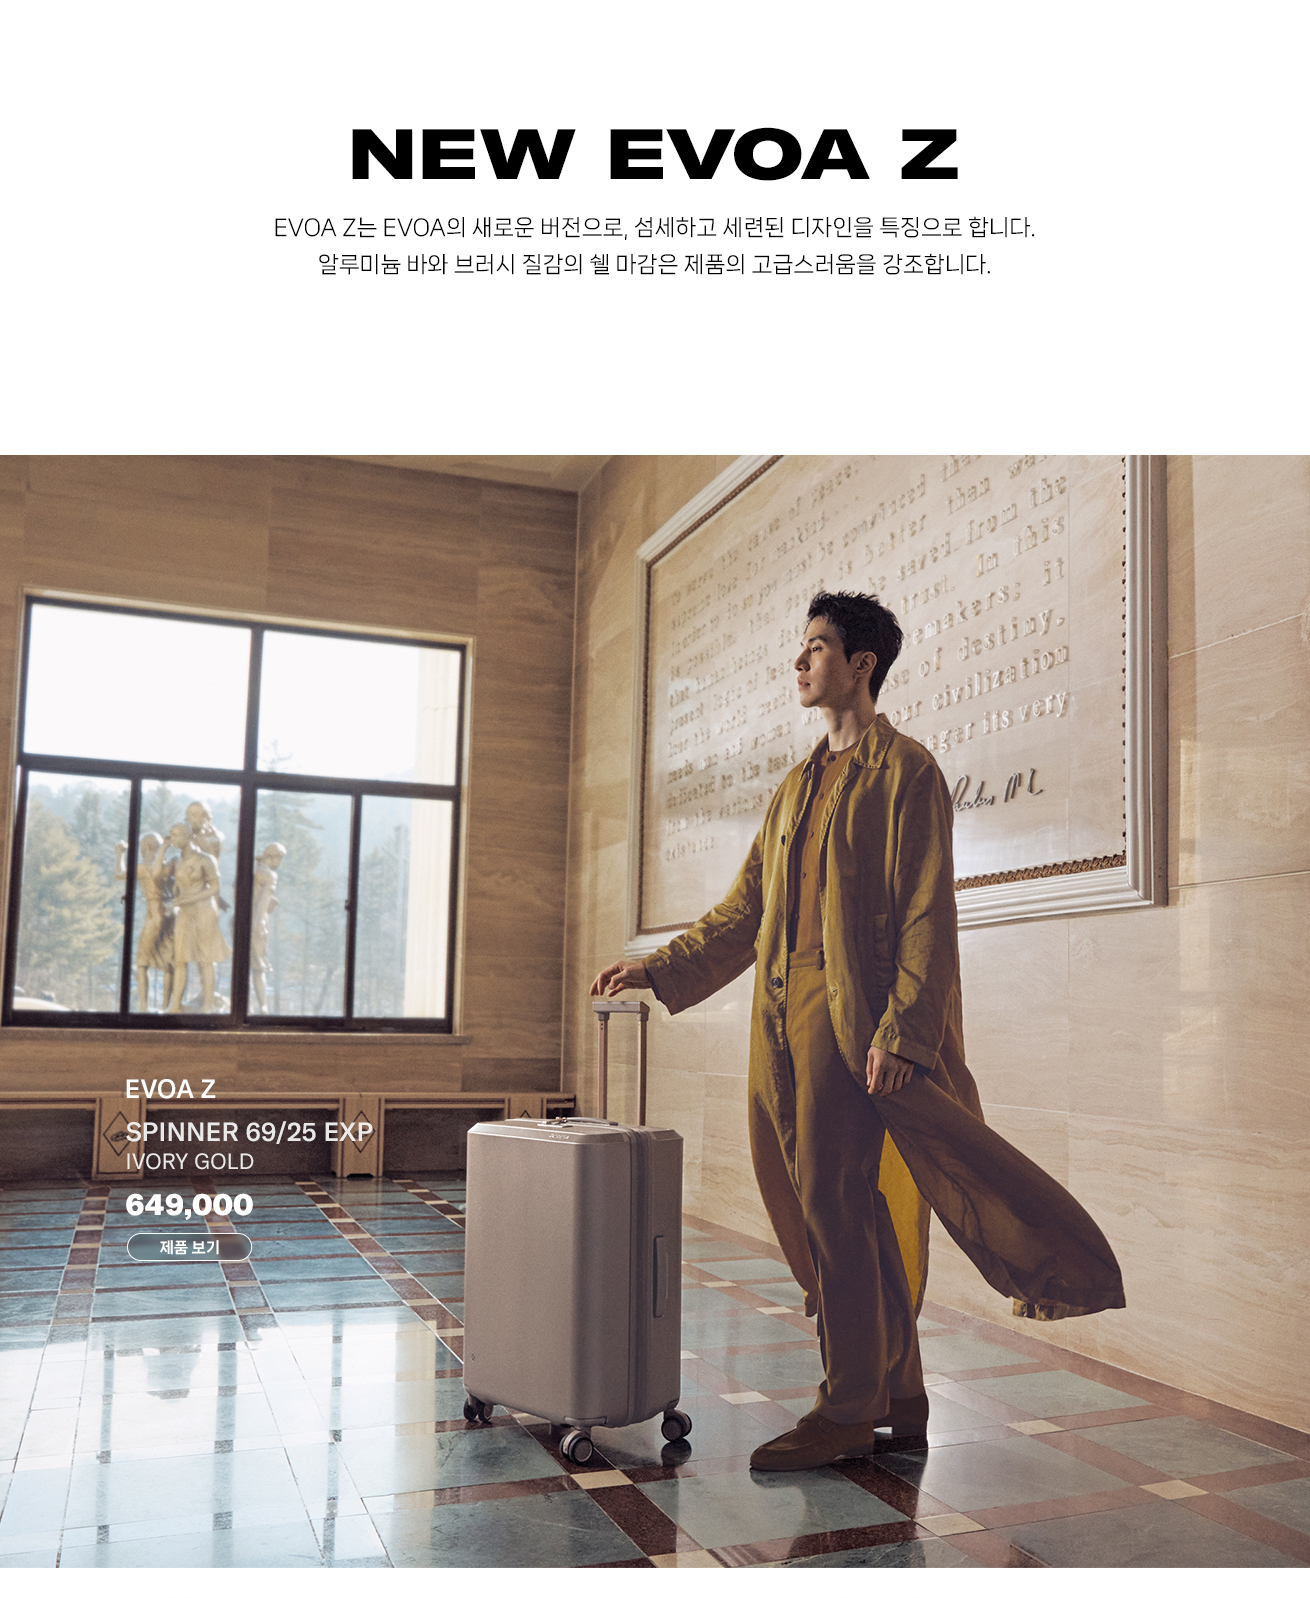 NEW EVOA Z EVOA Z는 EVOA의 새로운 버전으로, 섬세하고 세련된 디자인을 특징으로 합니다. 알루미늄 바와 브러시 질감의 쉘 마감은 제품의 고급스러움을 강조합니다. EVOA Z SPINNER 69/25 EXP IVORY GOLD 649,000 제품 보기